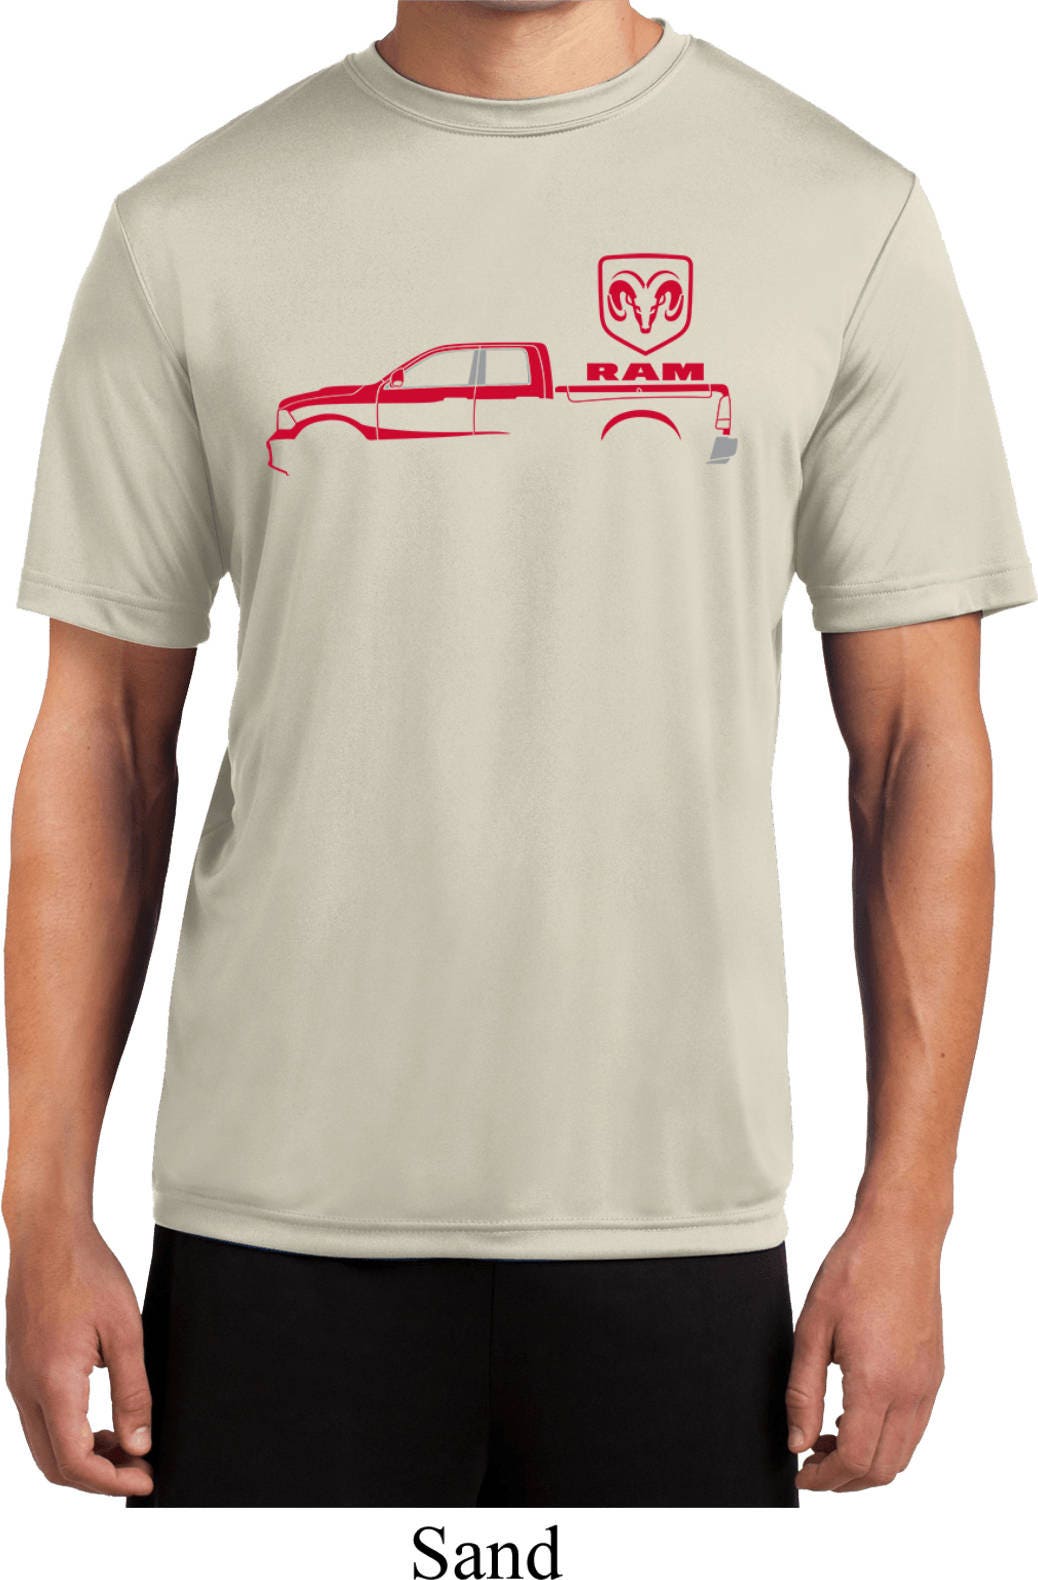 Red Dodge Ram Silhouette Men's Moisture Wicking Tee T-Shirt-21539E2-st350